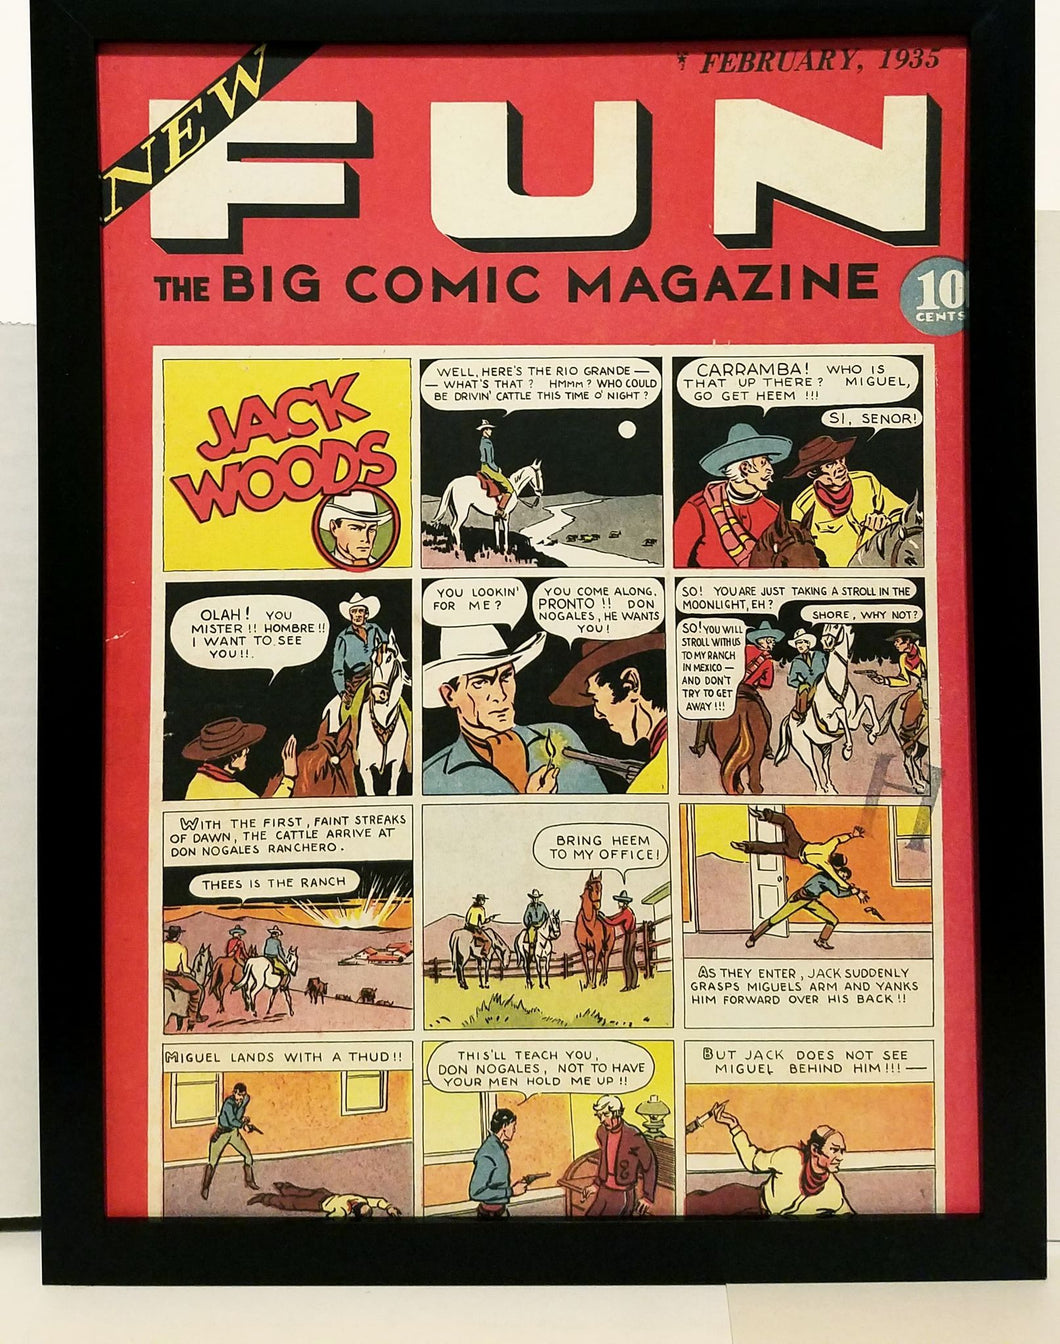 New Fun #1 by Lyman Anderson 9x12 FRAMED Vintage 1935 DC Comics Art Print Poster